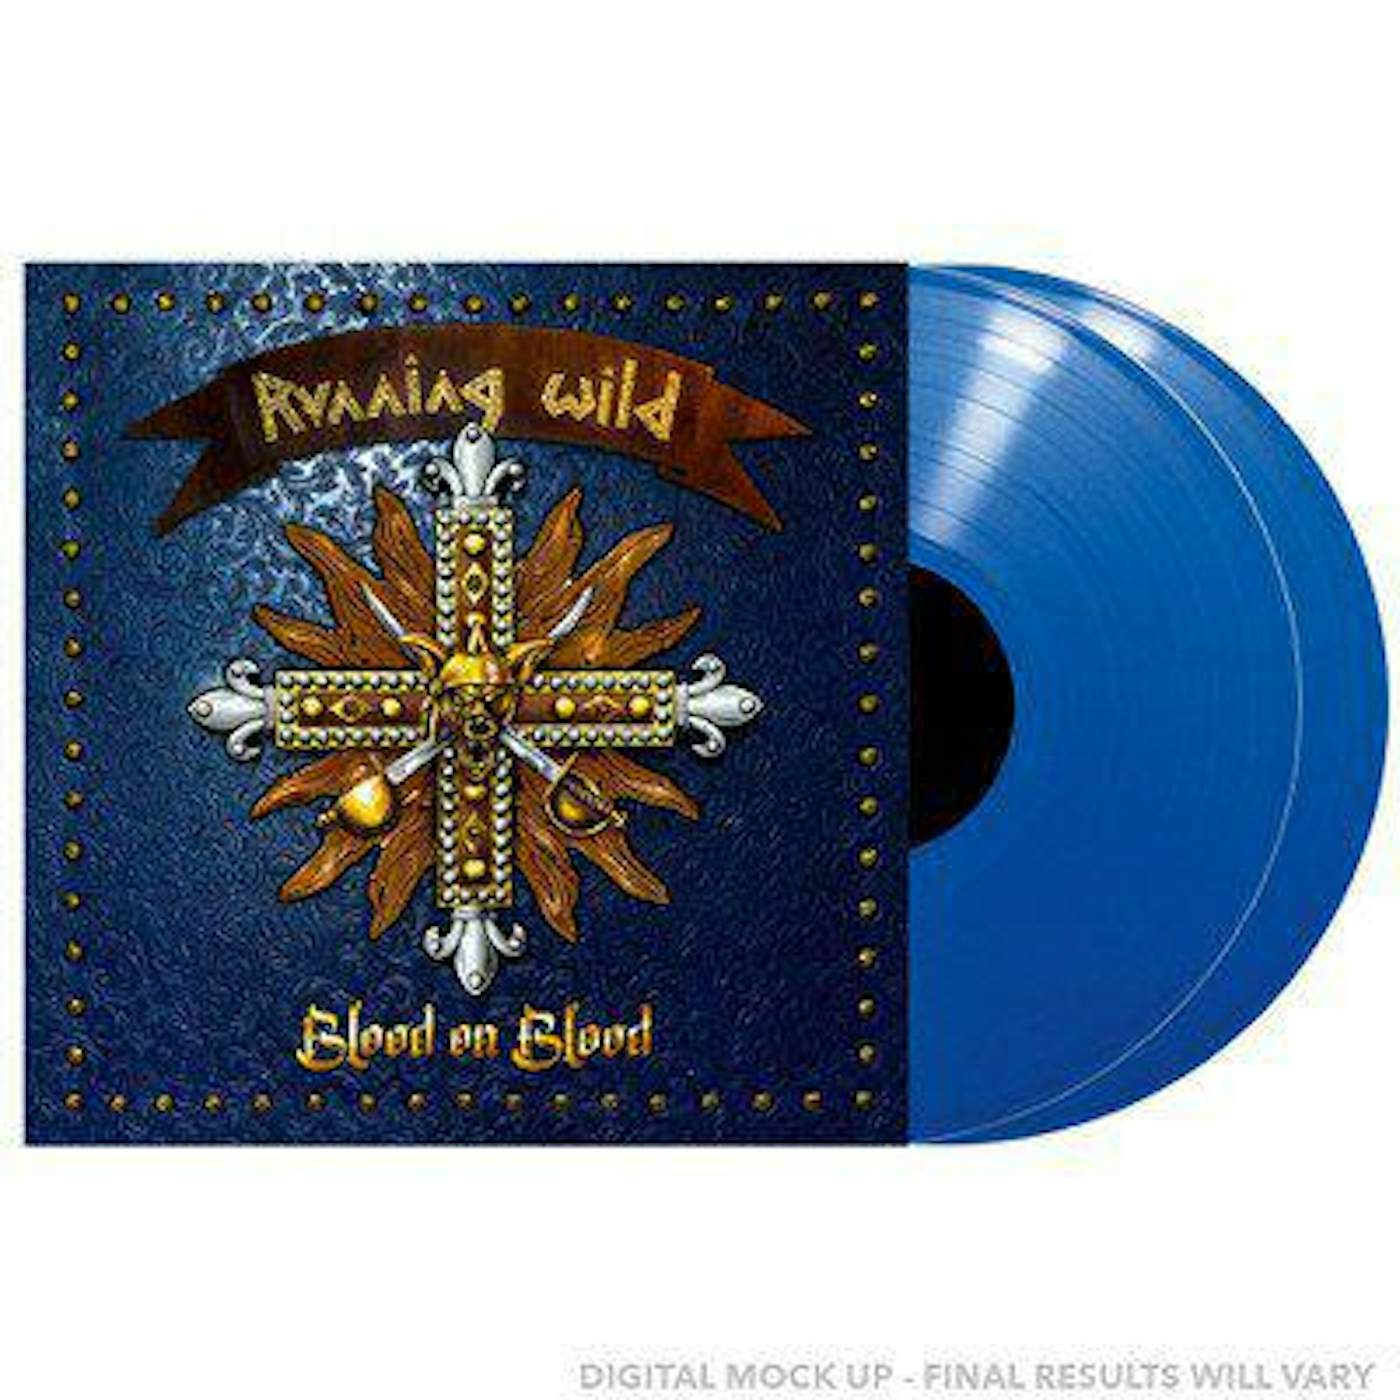 Running Wild BLOOD ON BLOOD (BLUE VINYL) Vinyl Record